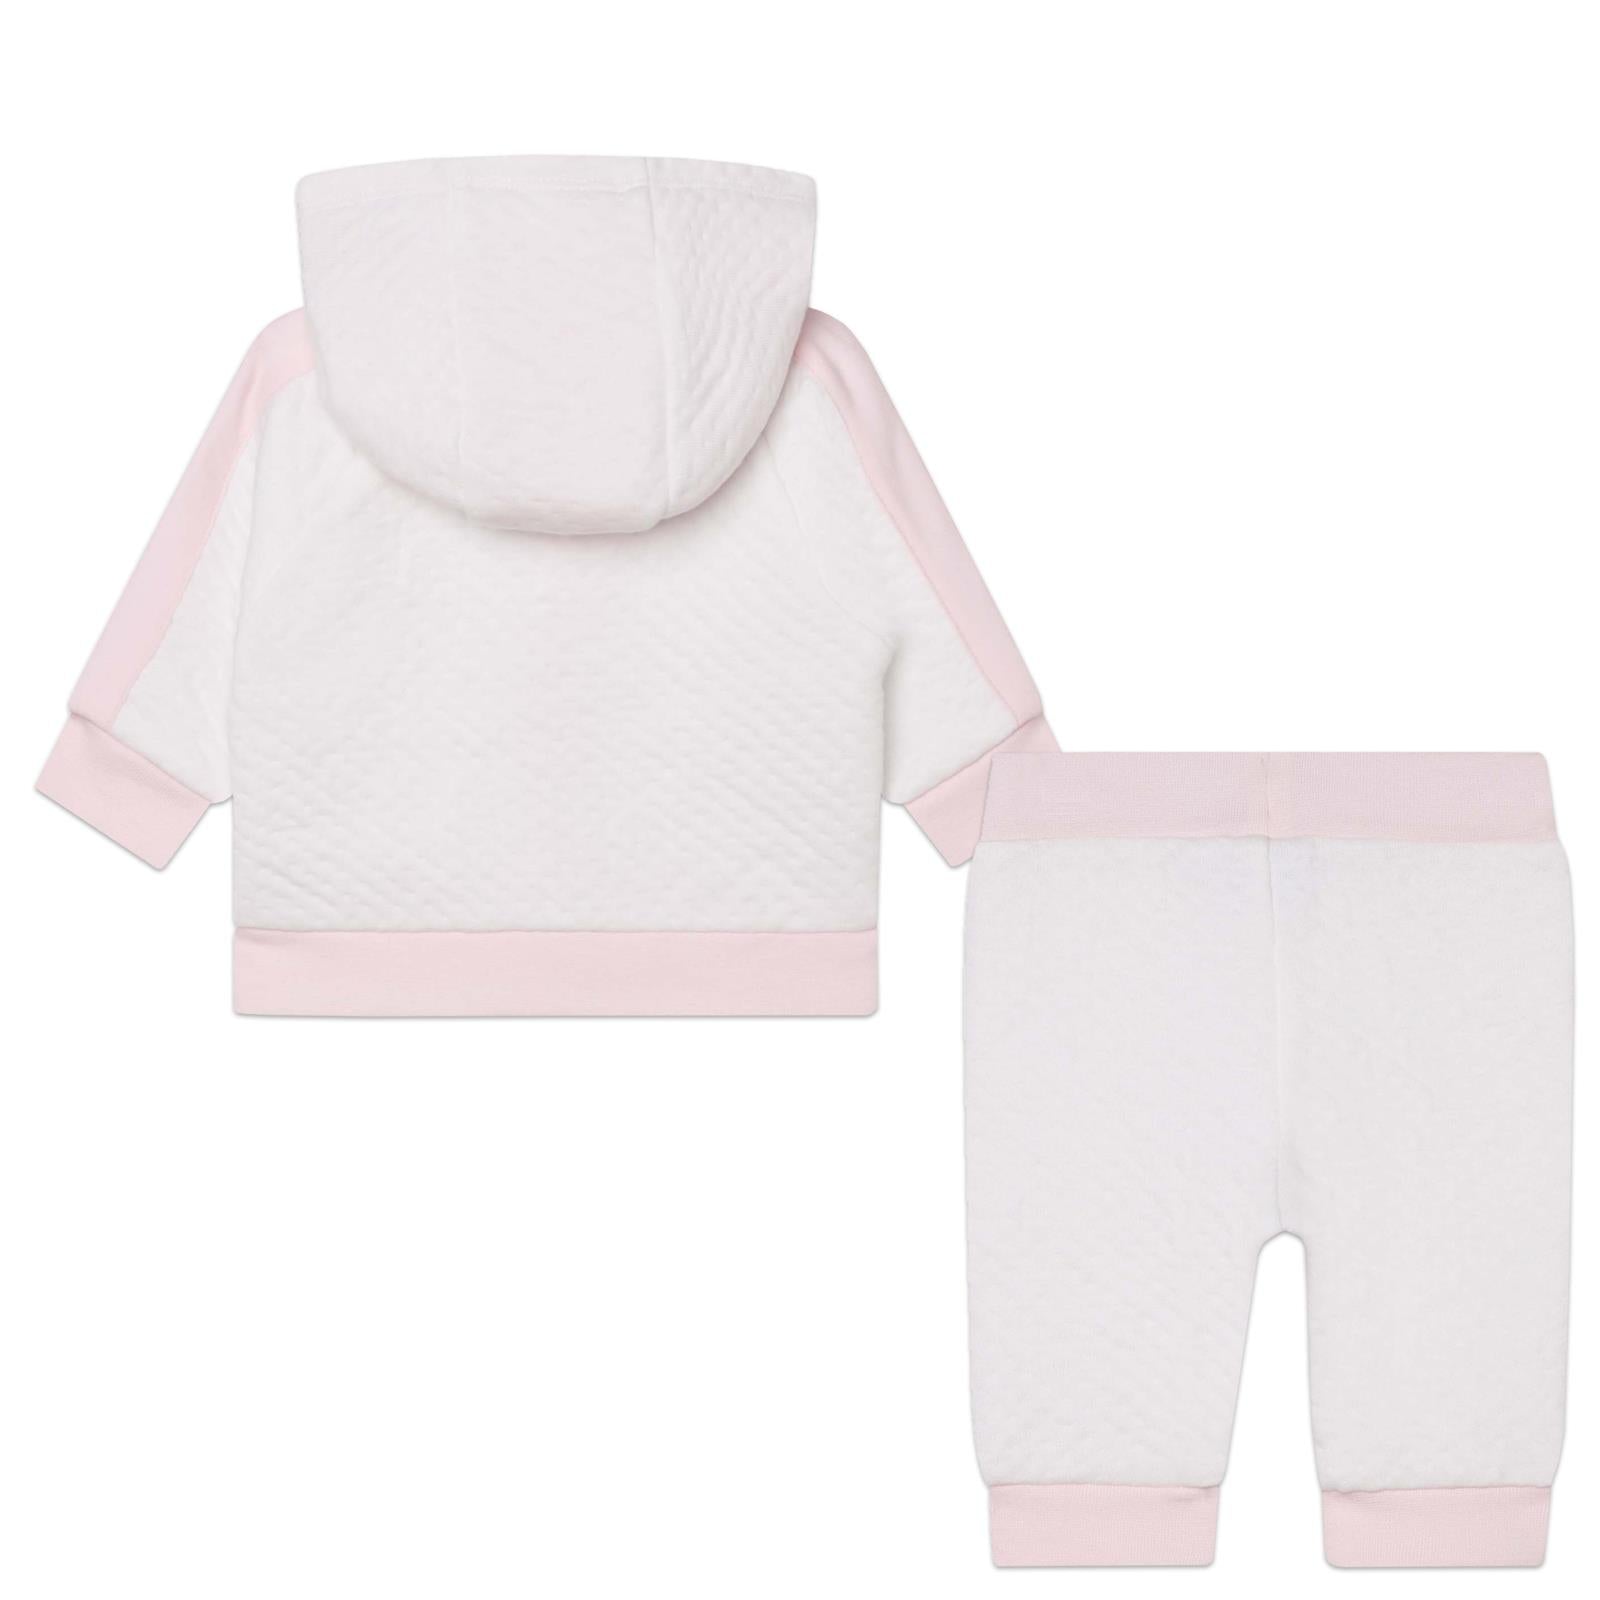 Hugo Boss Baby Girls White & Pink Tracksuit